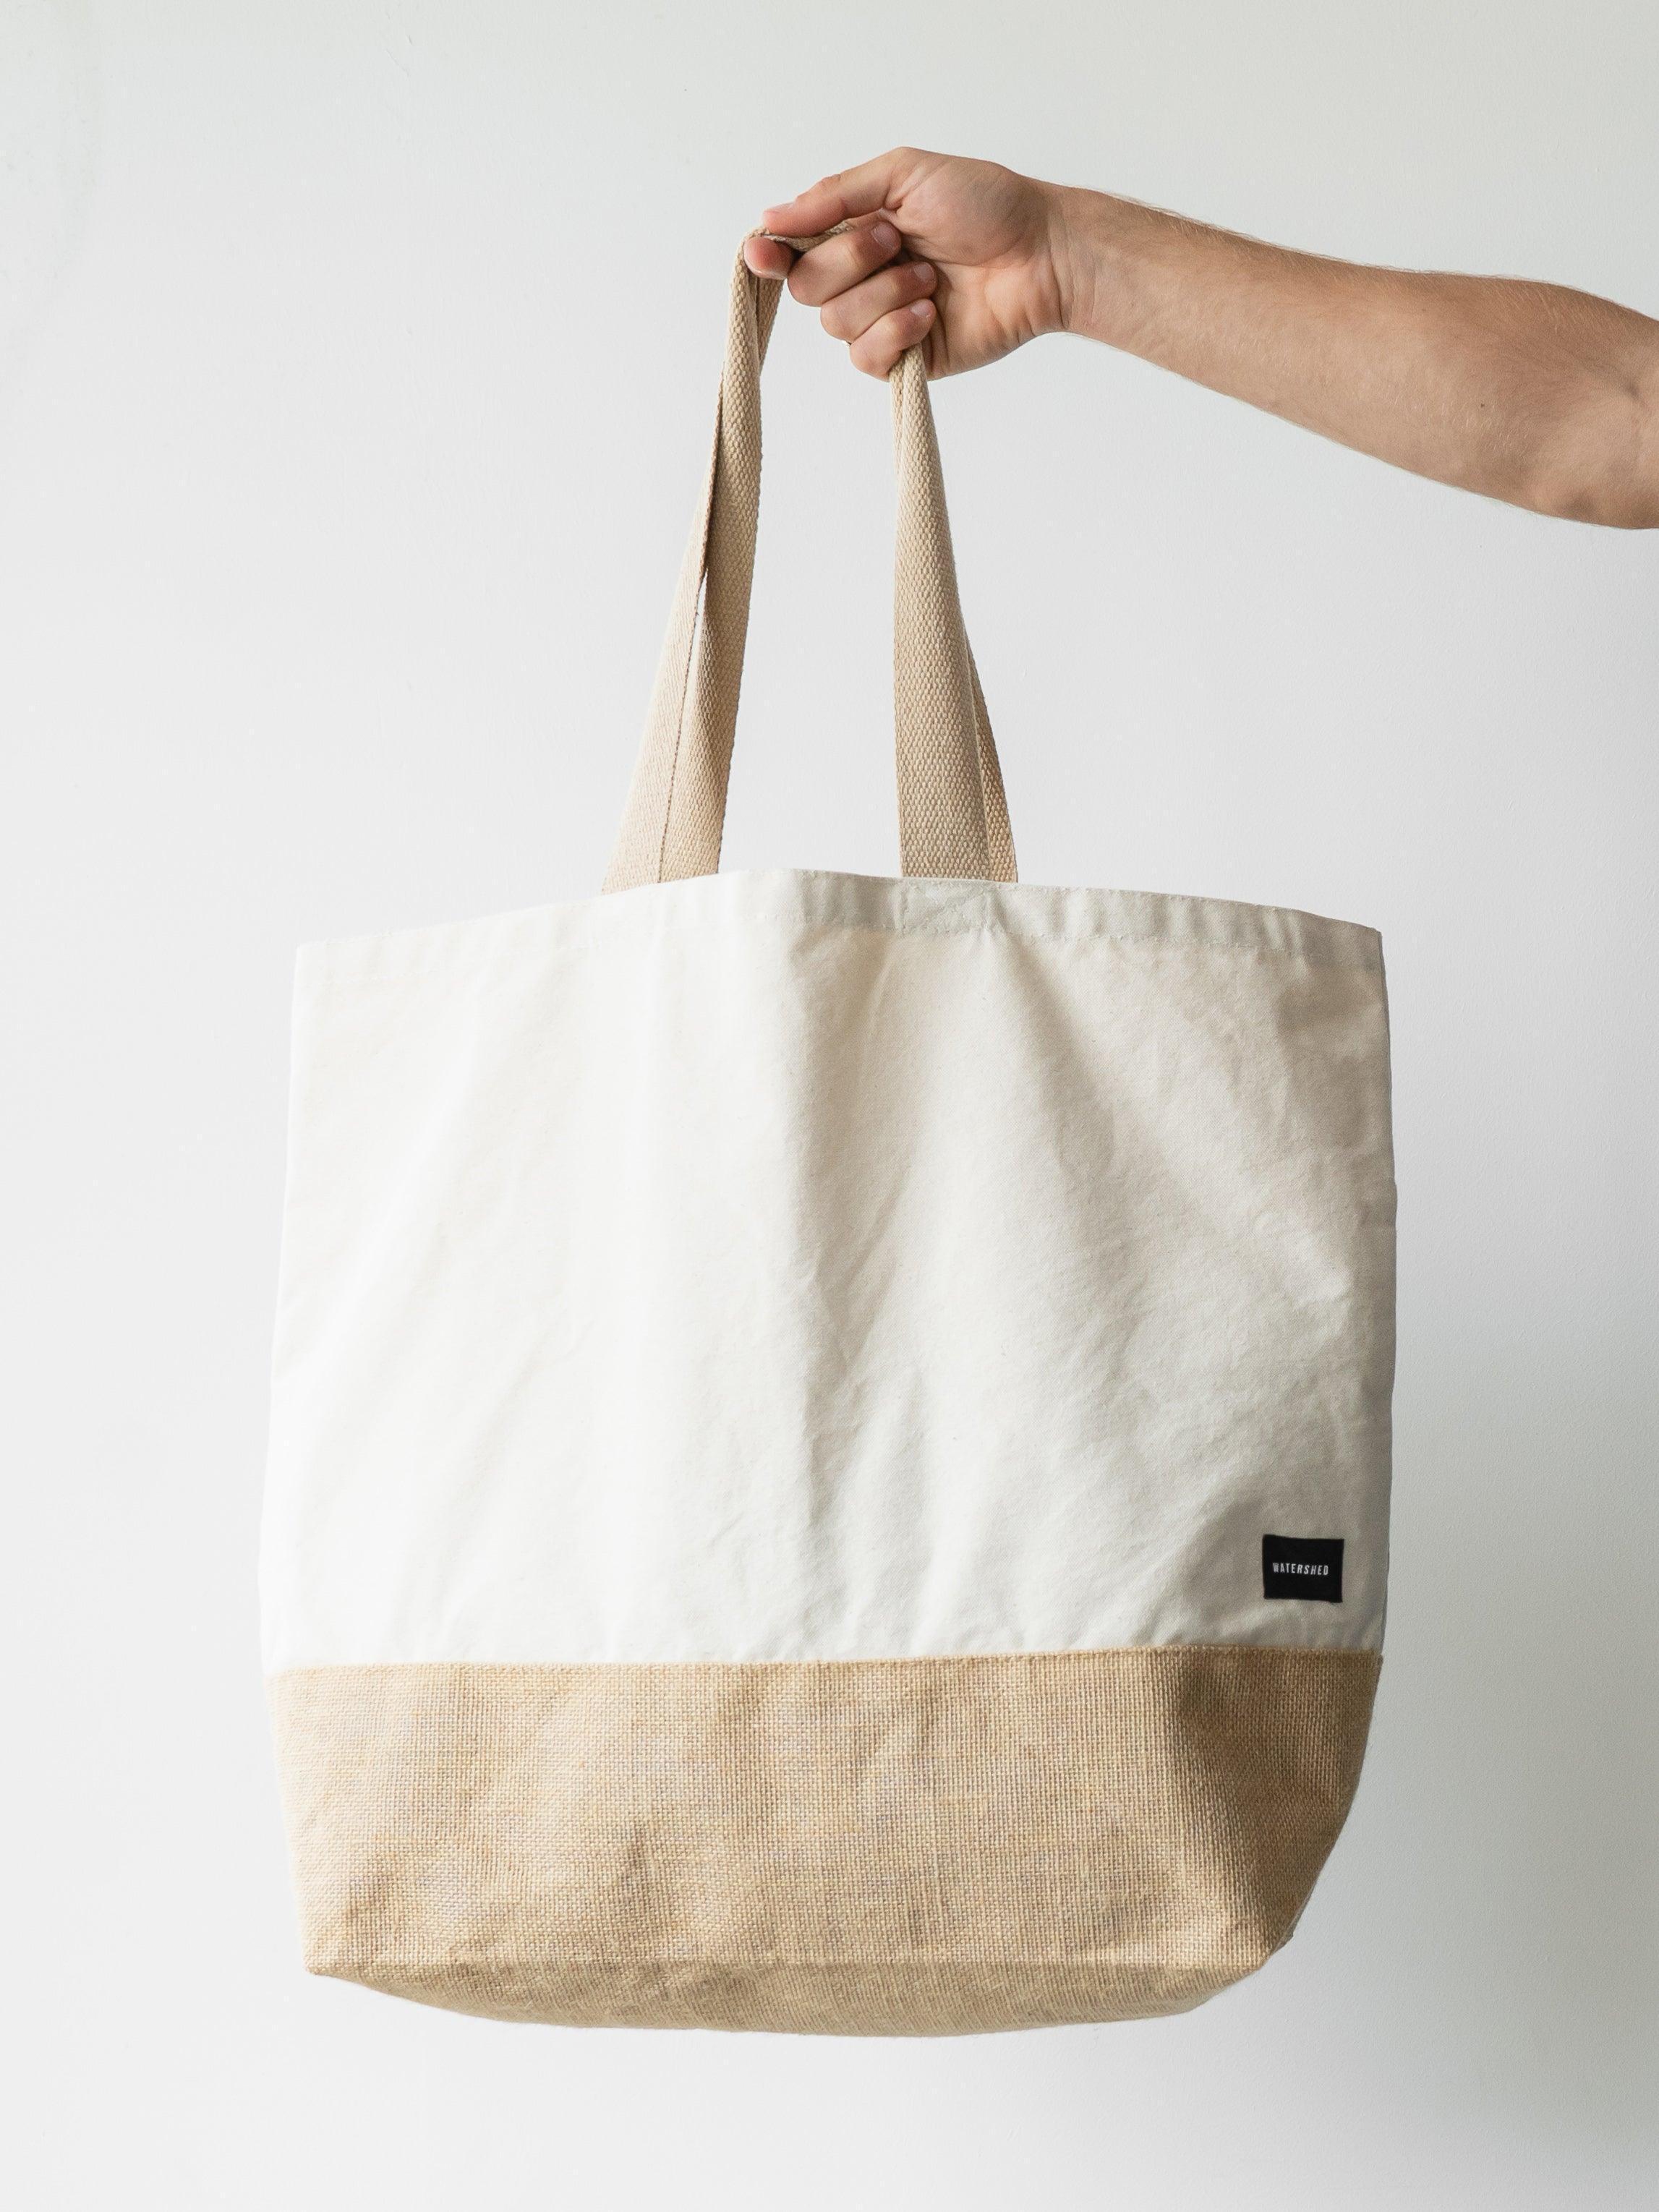 Mallow Beach Bag Medium - Natural/Jute - Watershed Brand